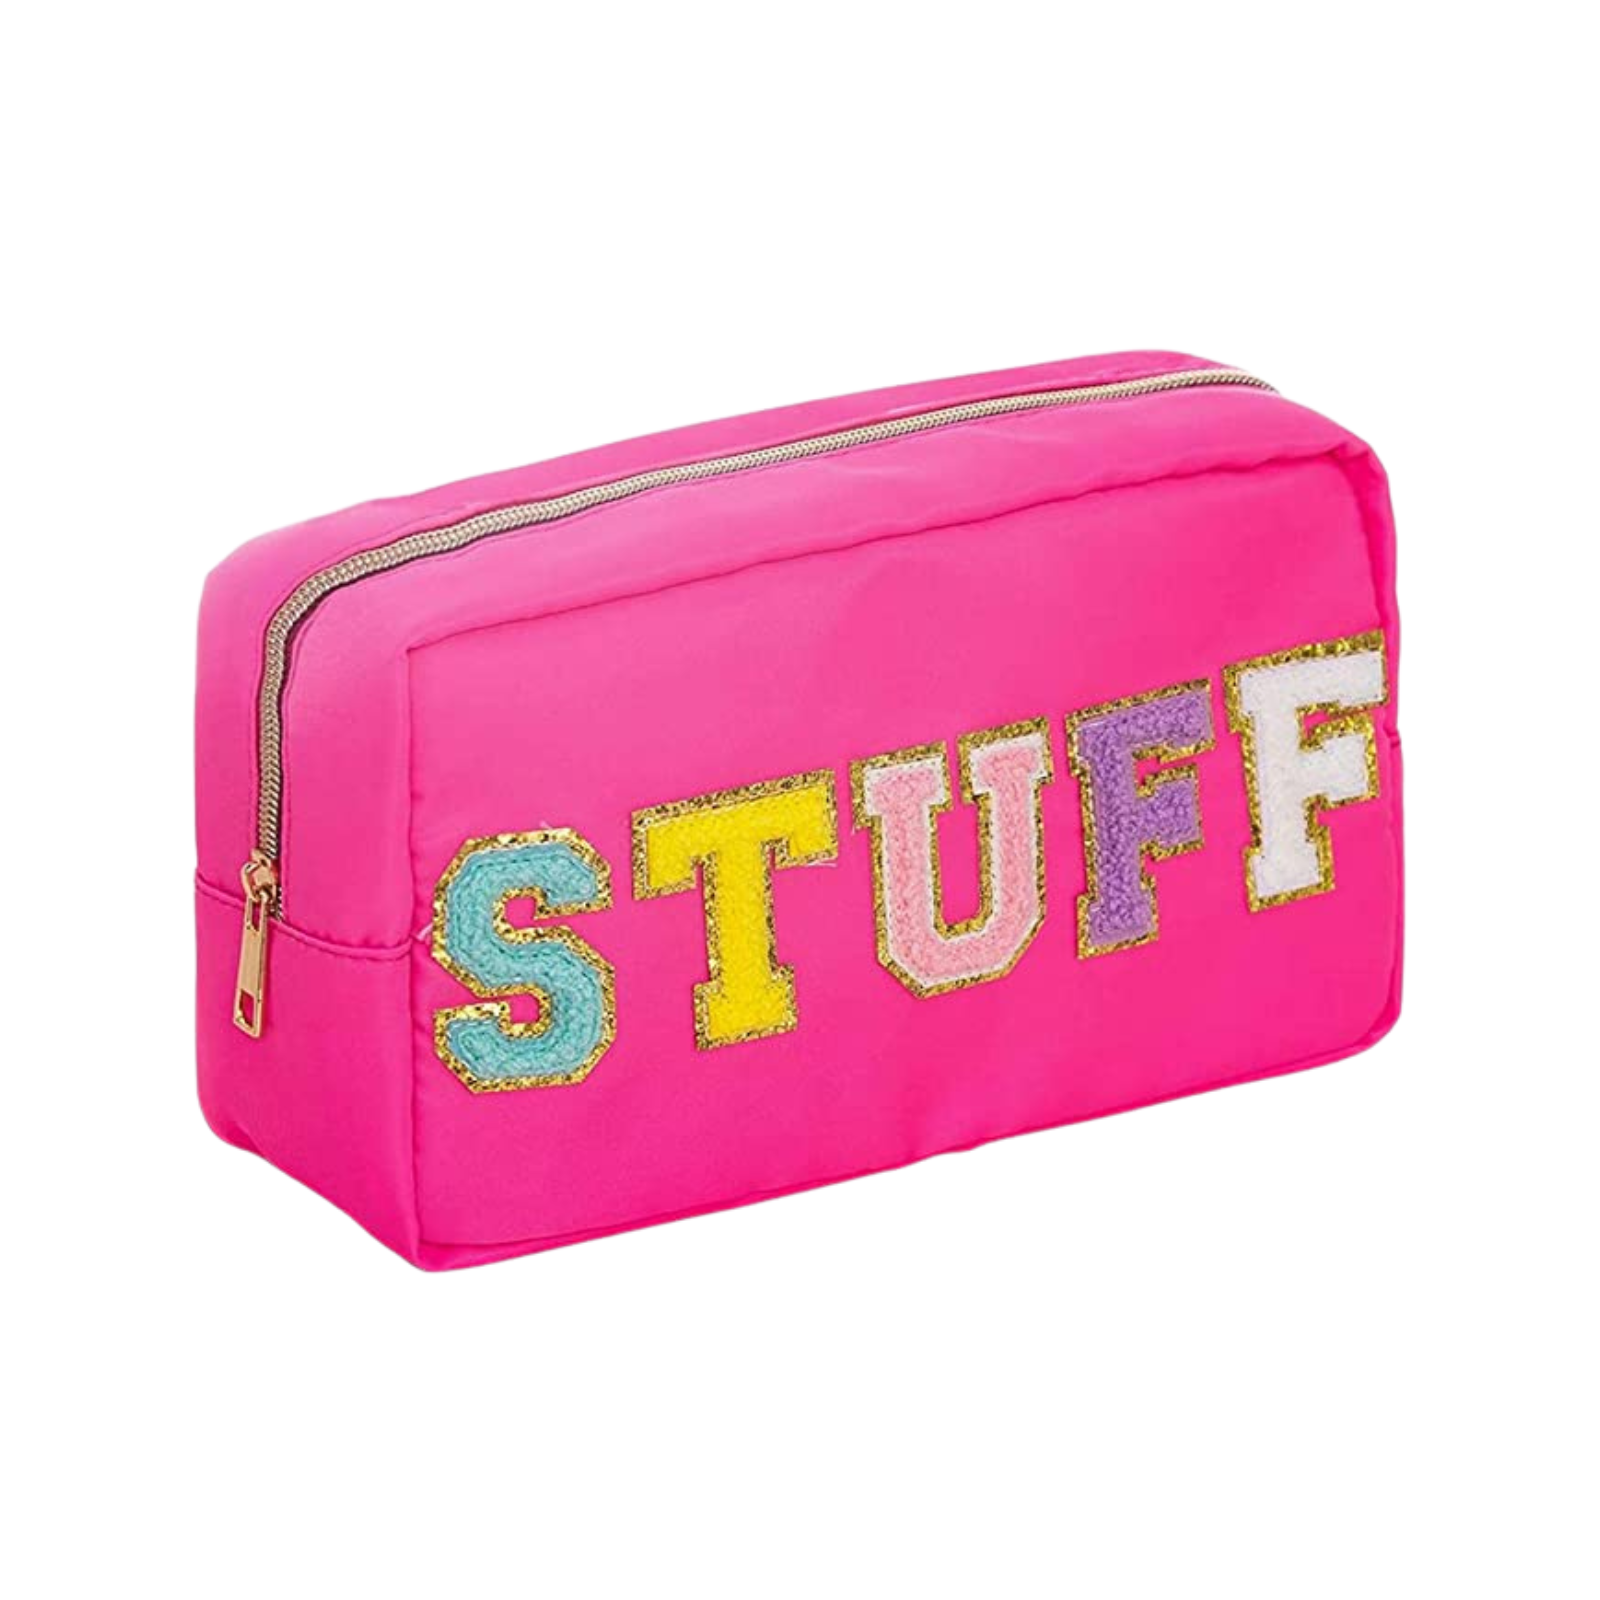 Stuff Bag (Pink)